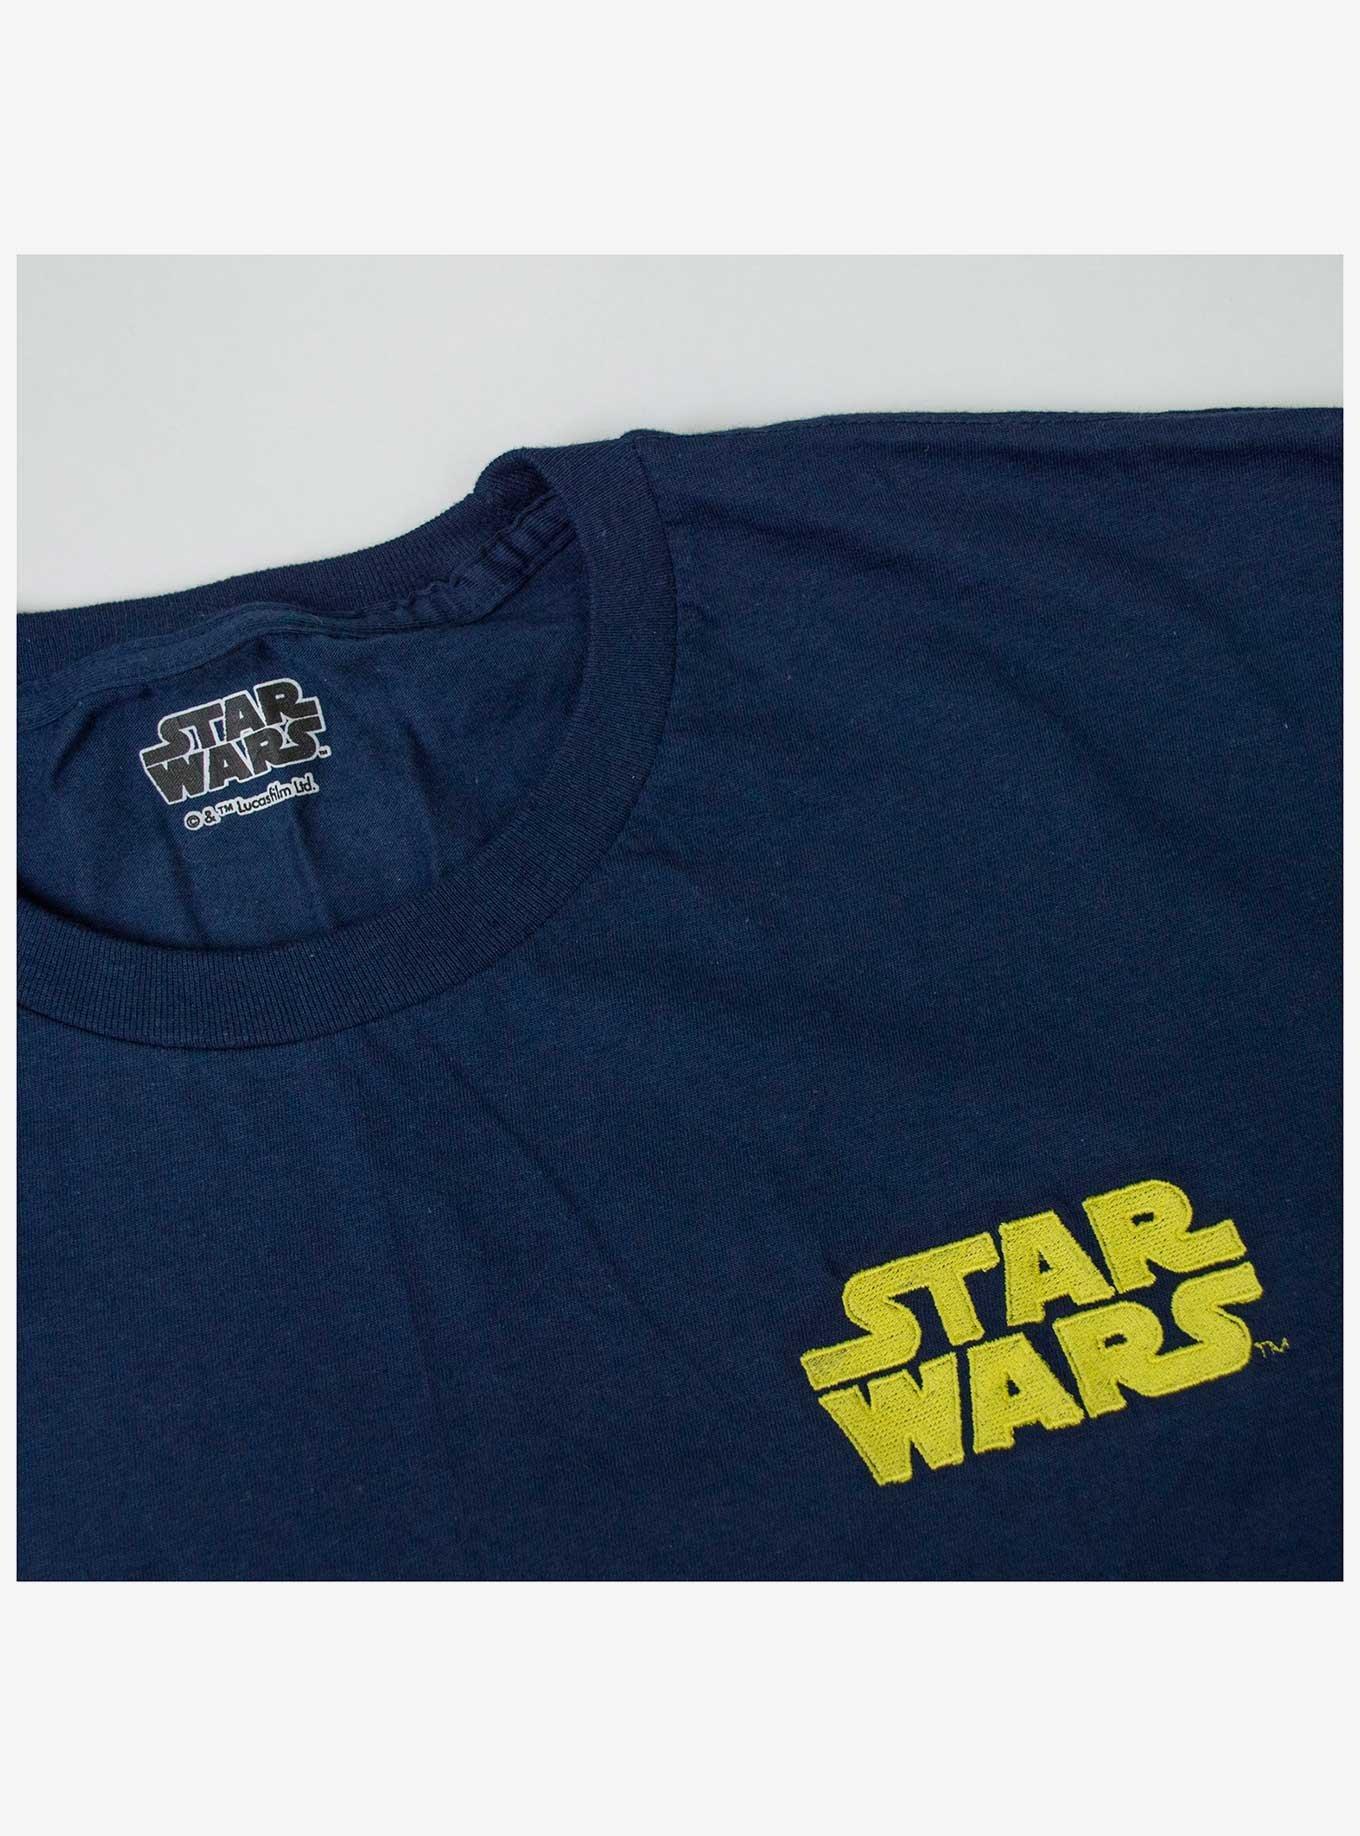 Star Wars Embroidered Logo T-Shirt, NAVY, alternate